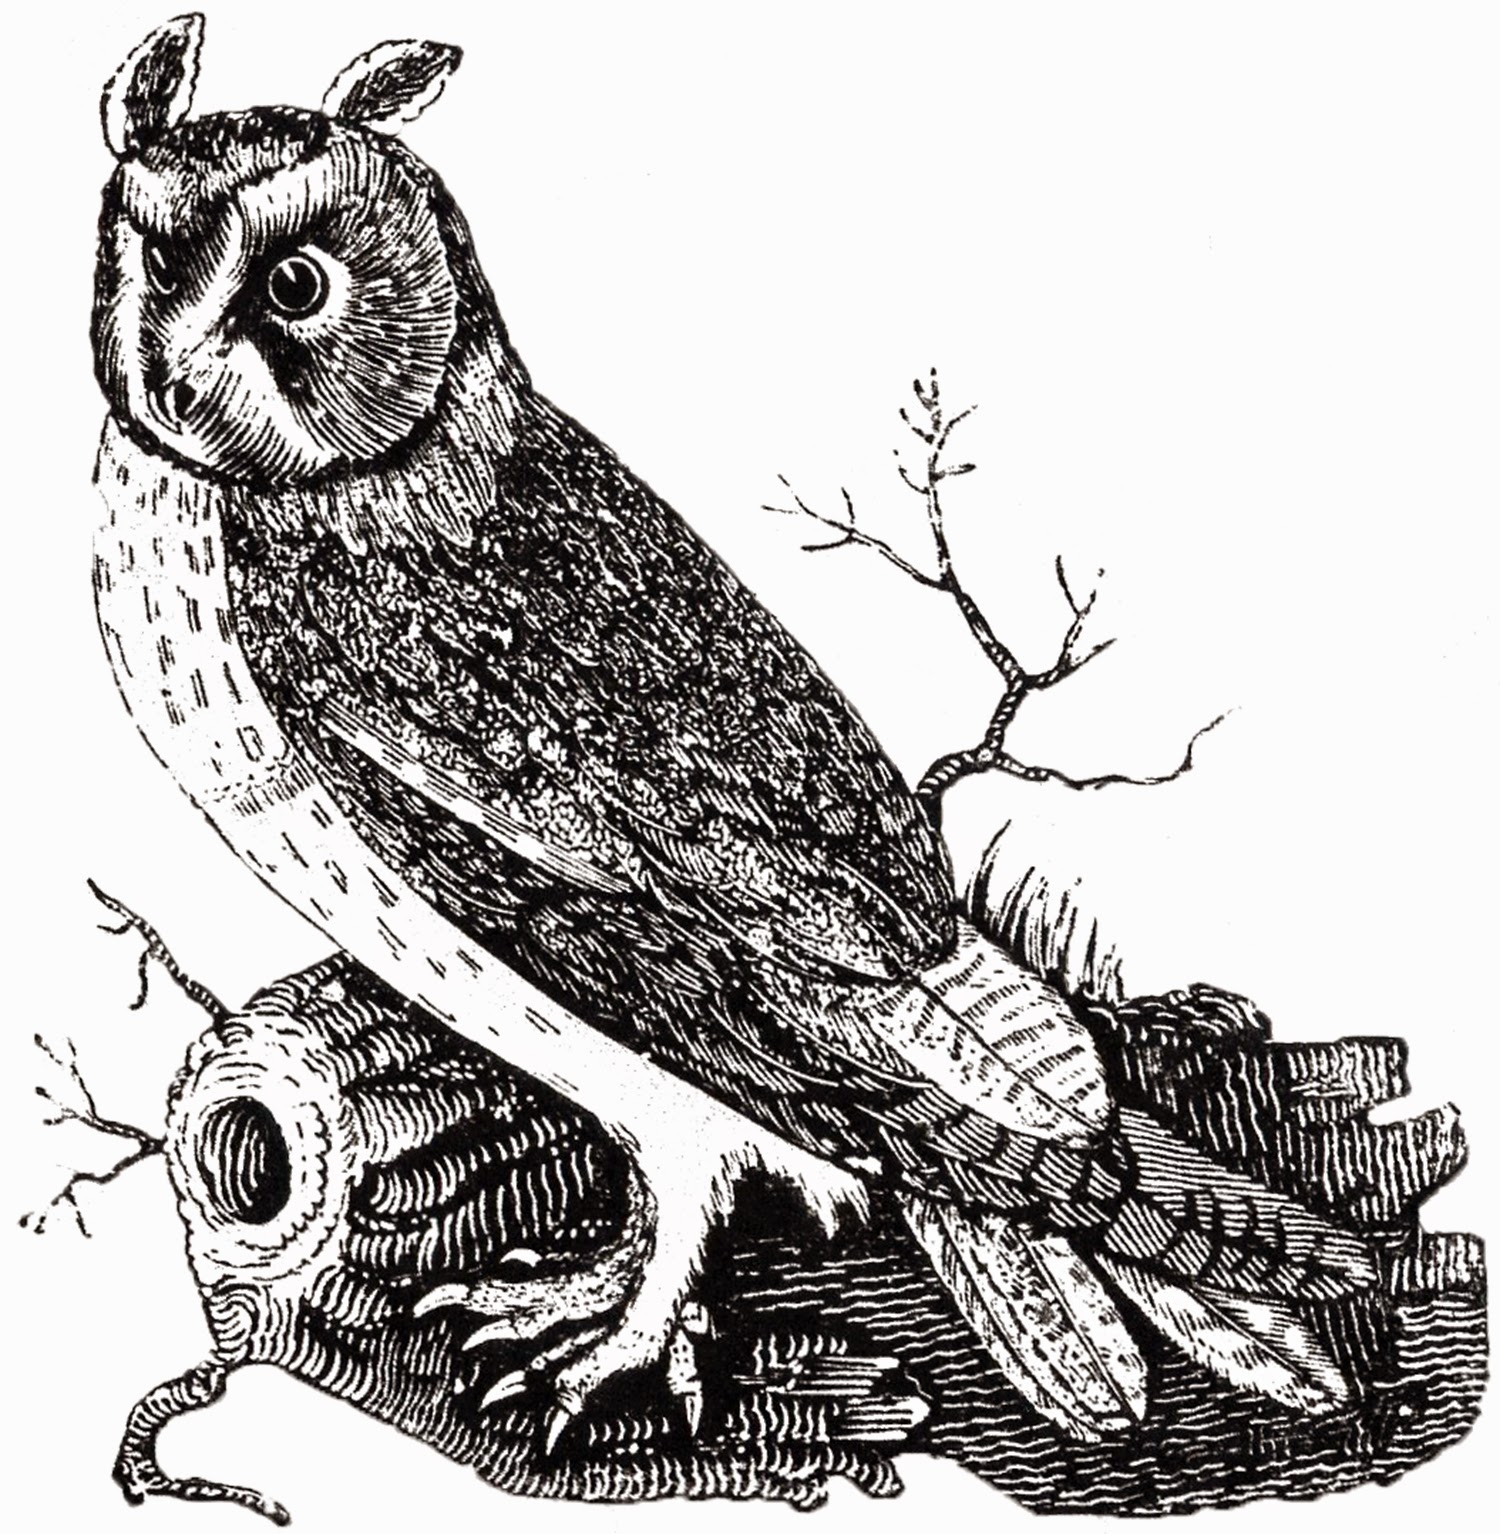 http://thegraphicsfairy.com/free-vintage-owl-image/